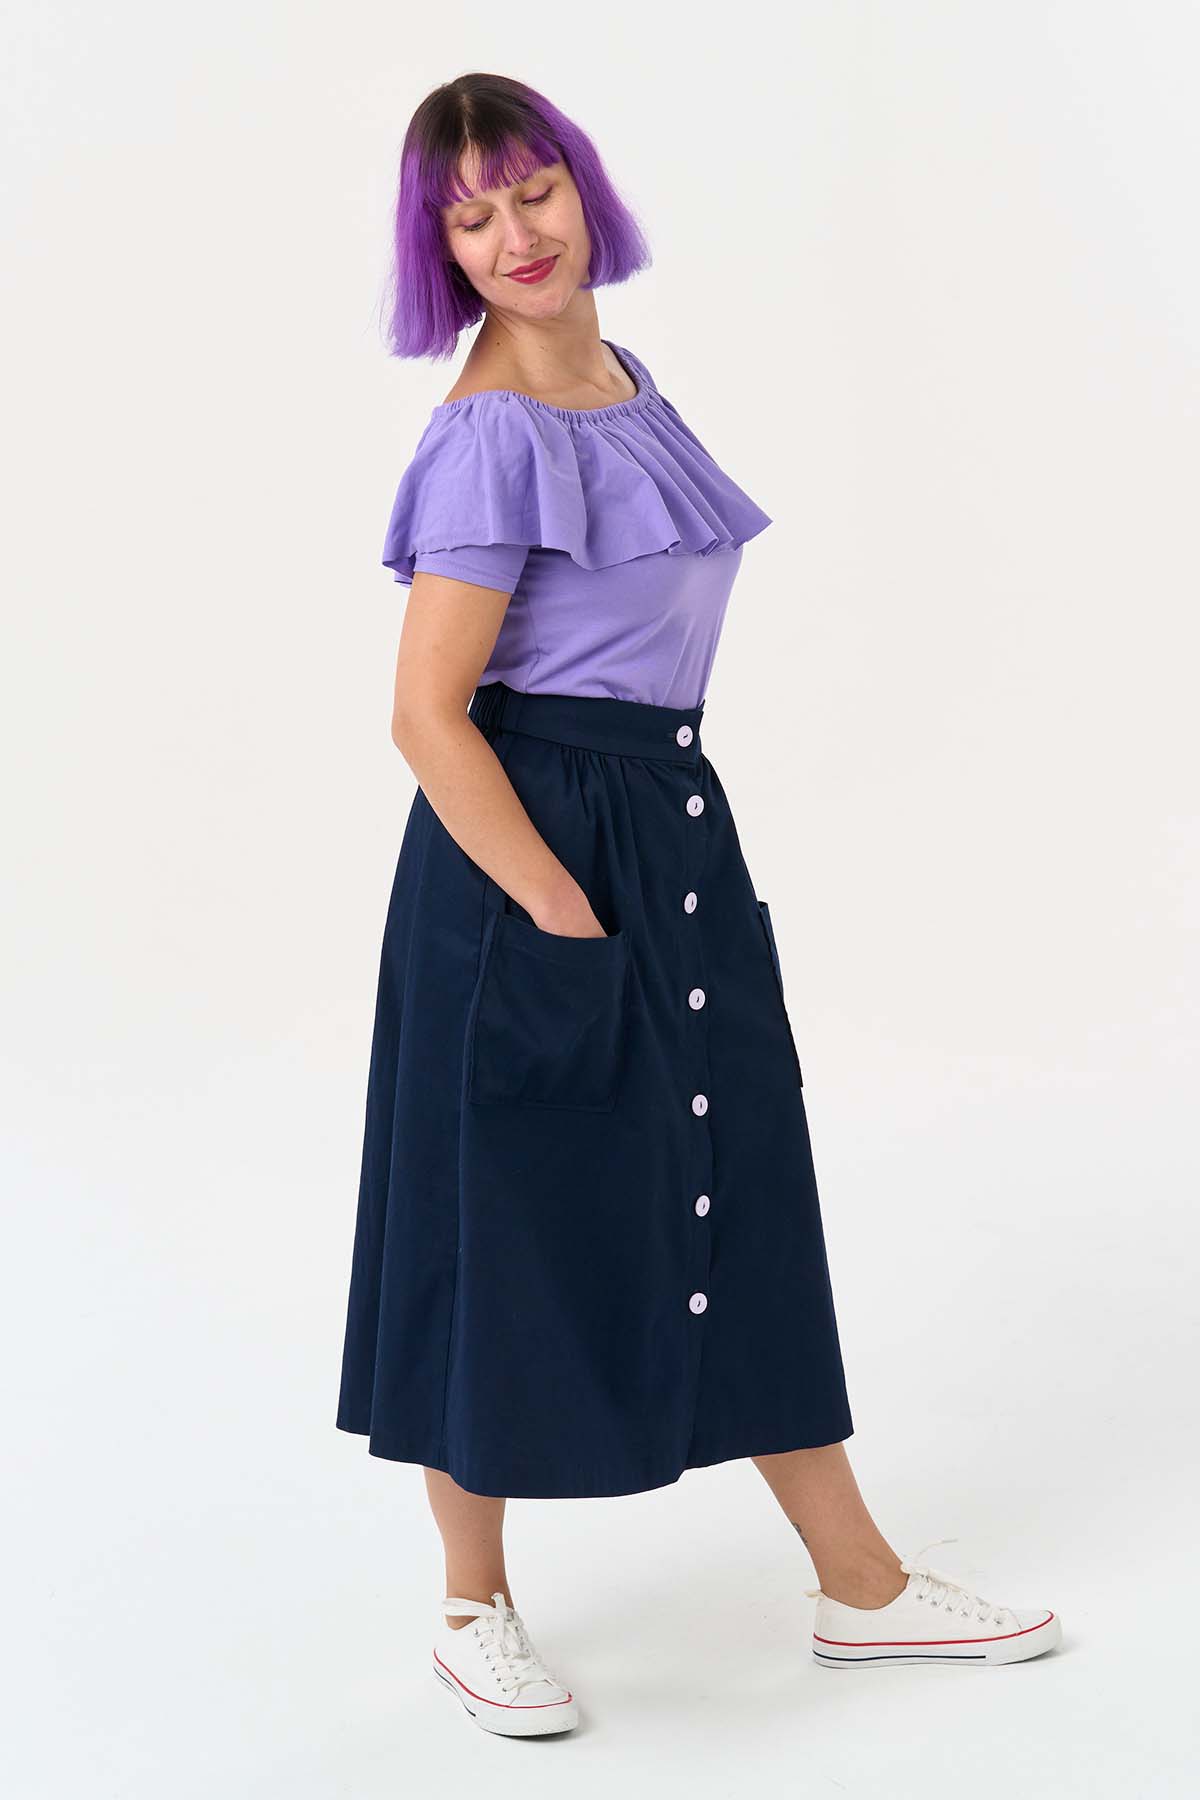 Free Corduroy Skirt Pattern - Womens - Life Sew Savory